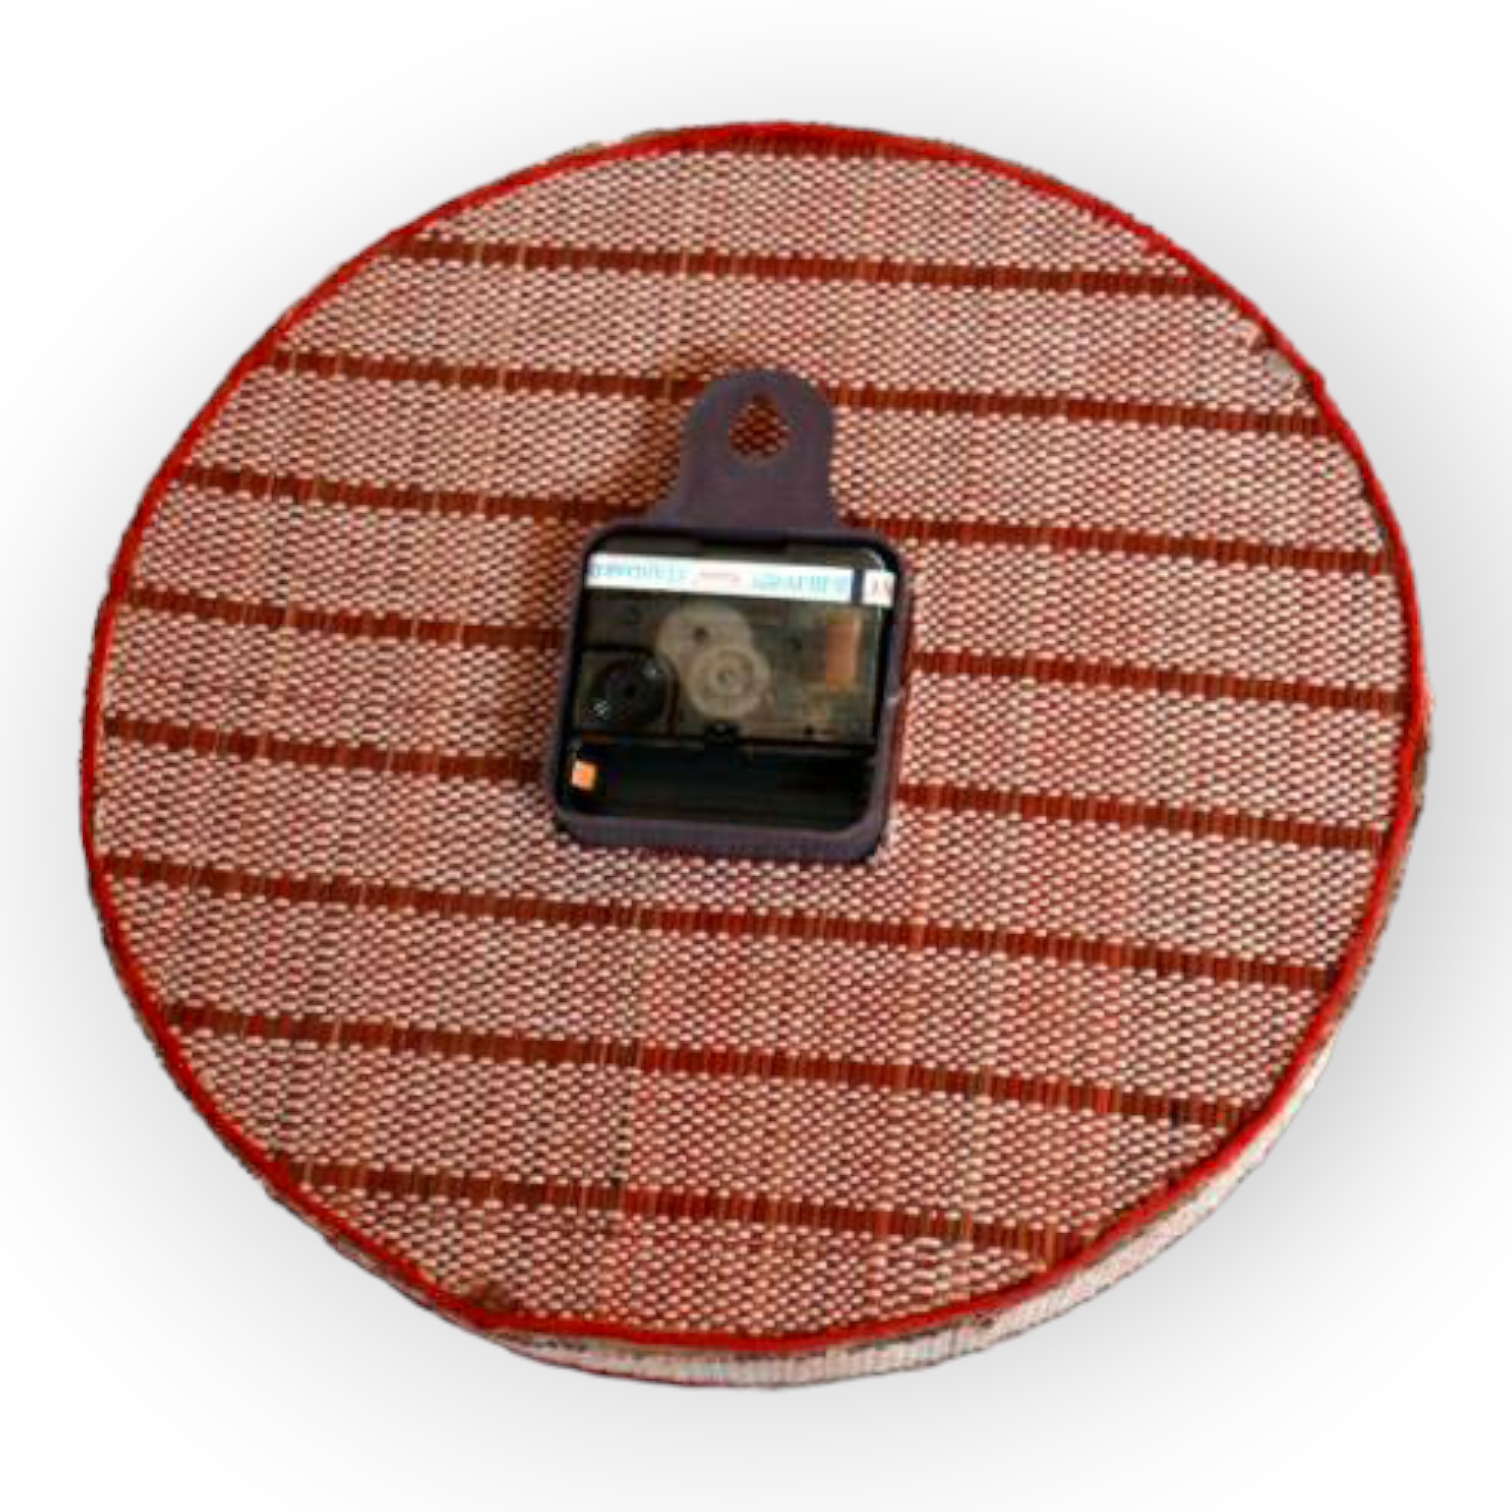 Madur Kathi Wall Clock in Maroon Colour - 0